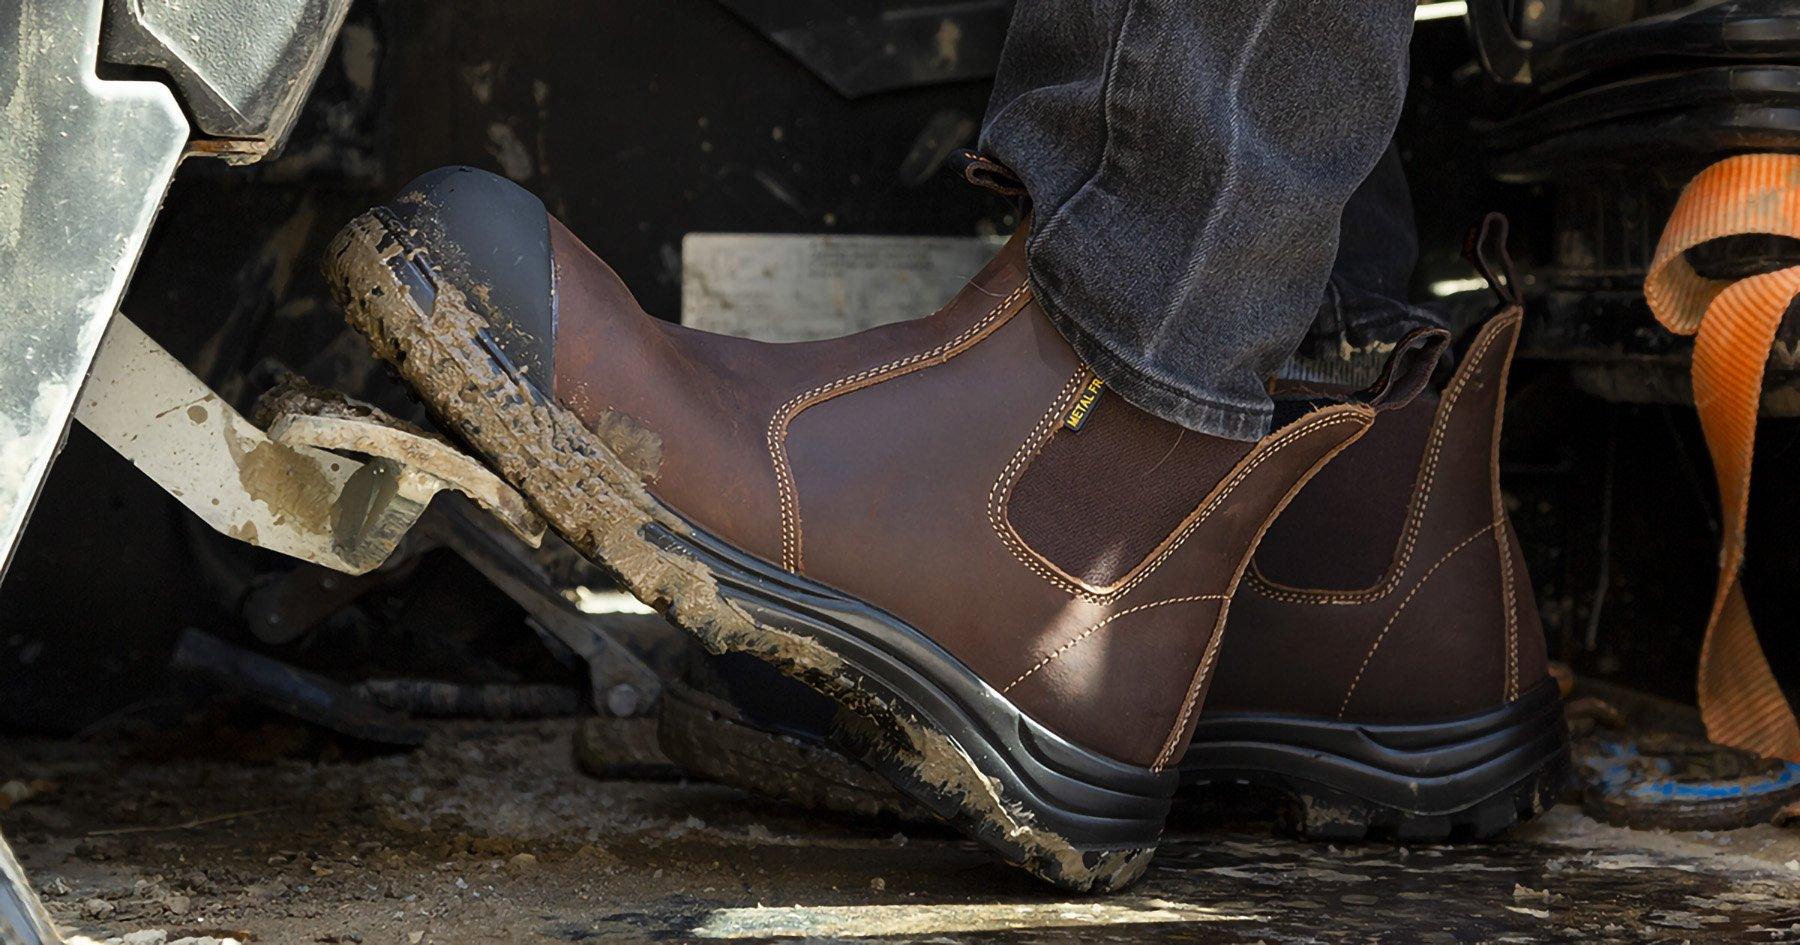 CSA Steel Toe Boots for Sale - MooseLog